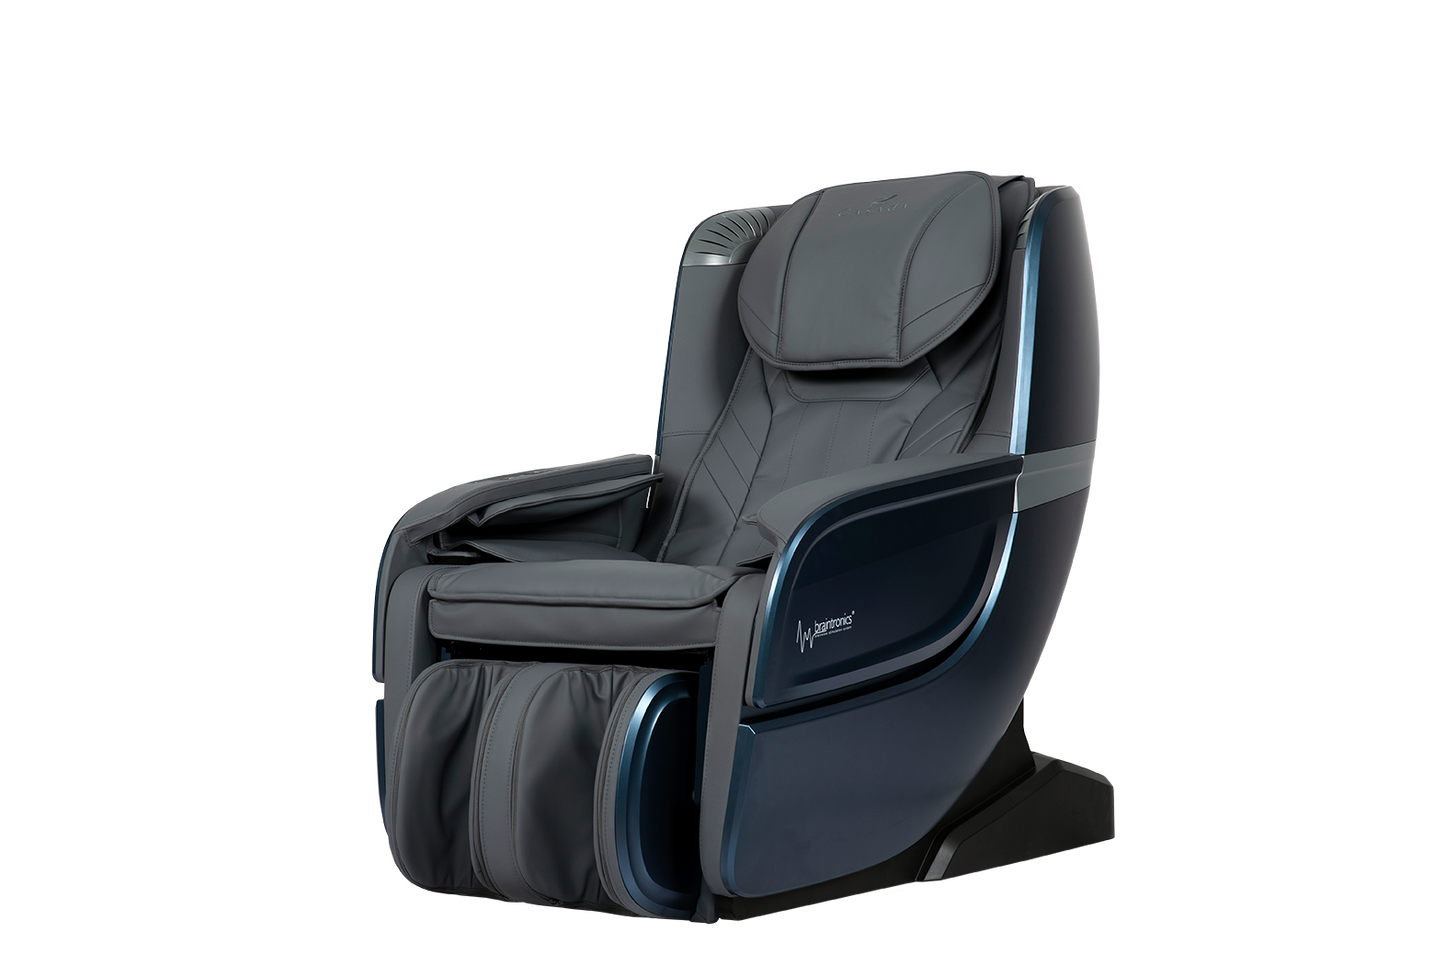 Casada Ecosonic Massage Chair with Braintronics™